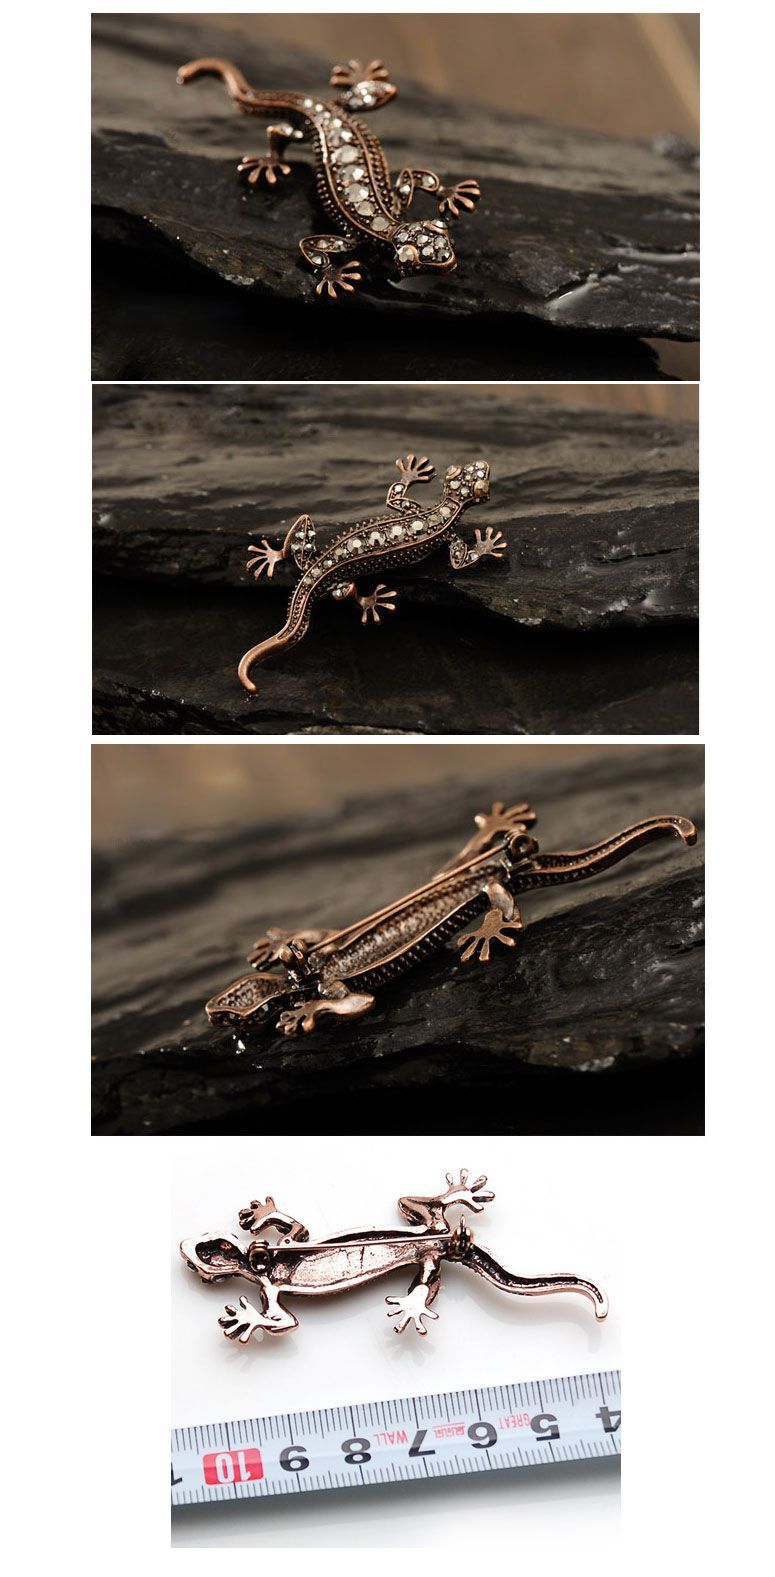 Vintage Bronze Exquisite Rhinestone Crawling Gecko Pin Brooch